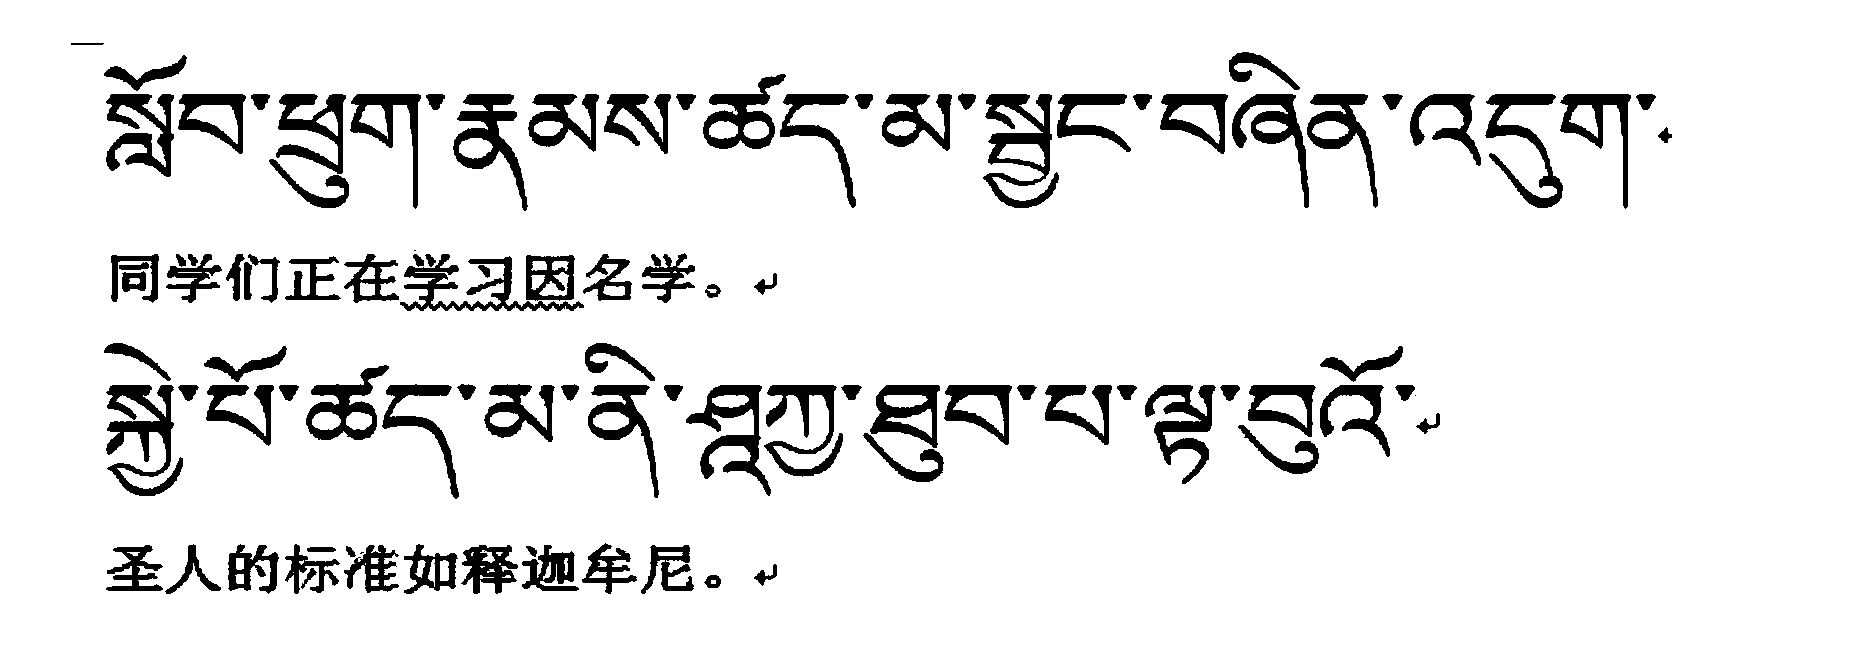 Semantic ontology creation and vocabulary expansion method for Tibetan language